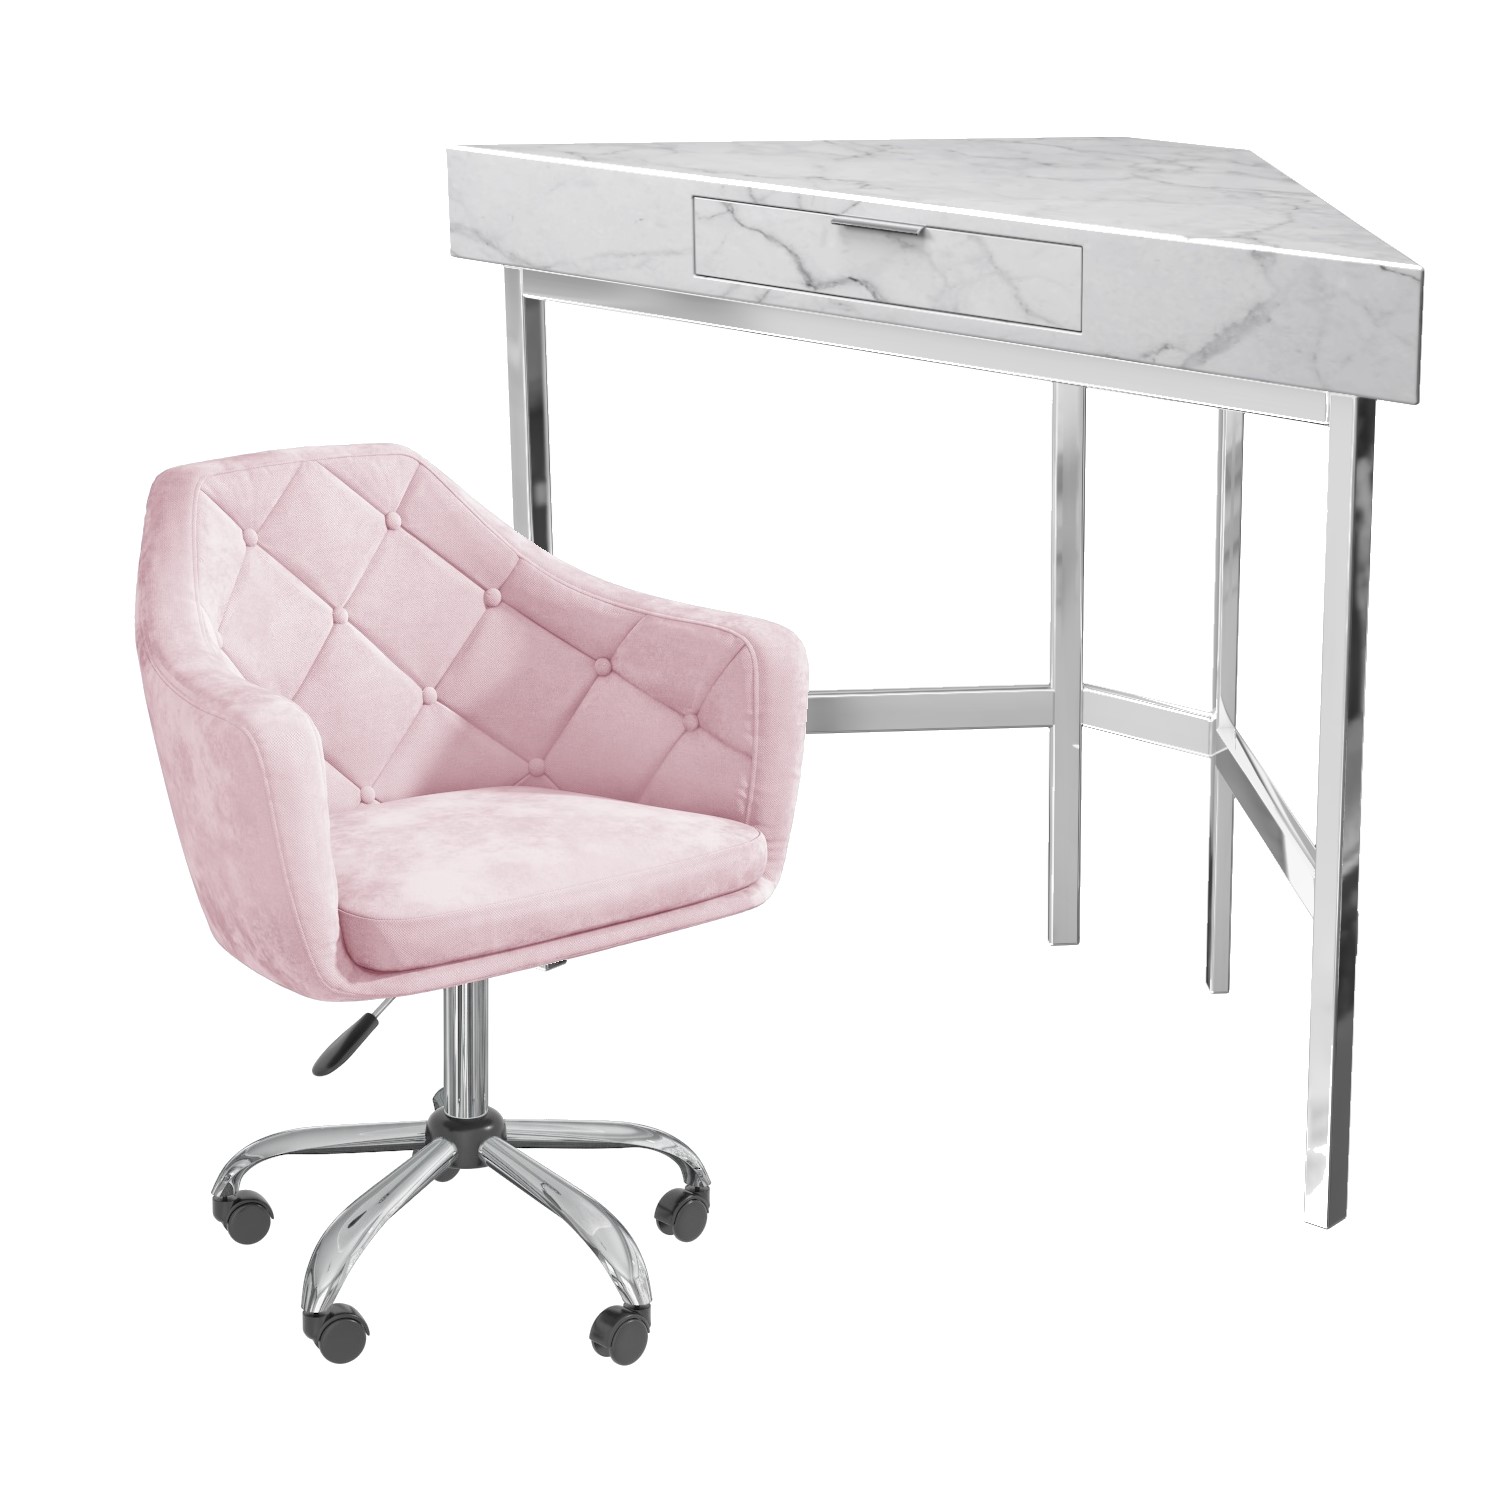 Photo of White marble & pink velvet corner office desk and chair set - roxy